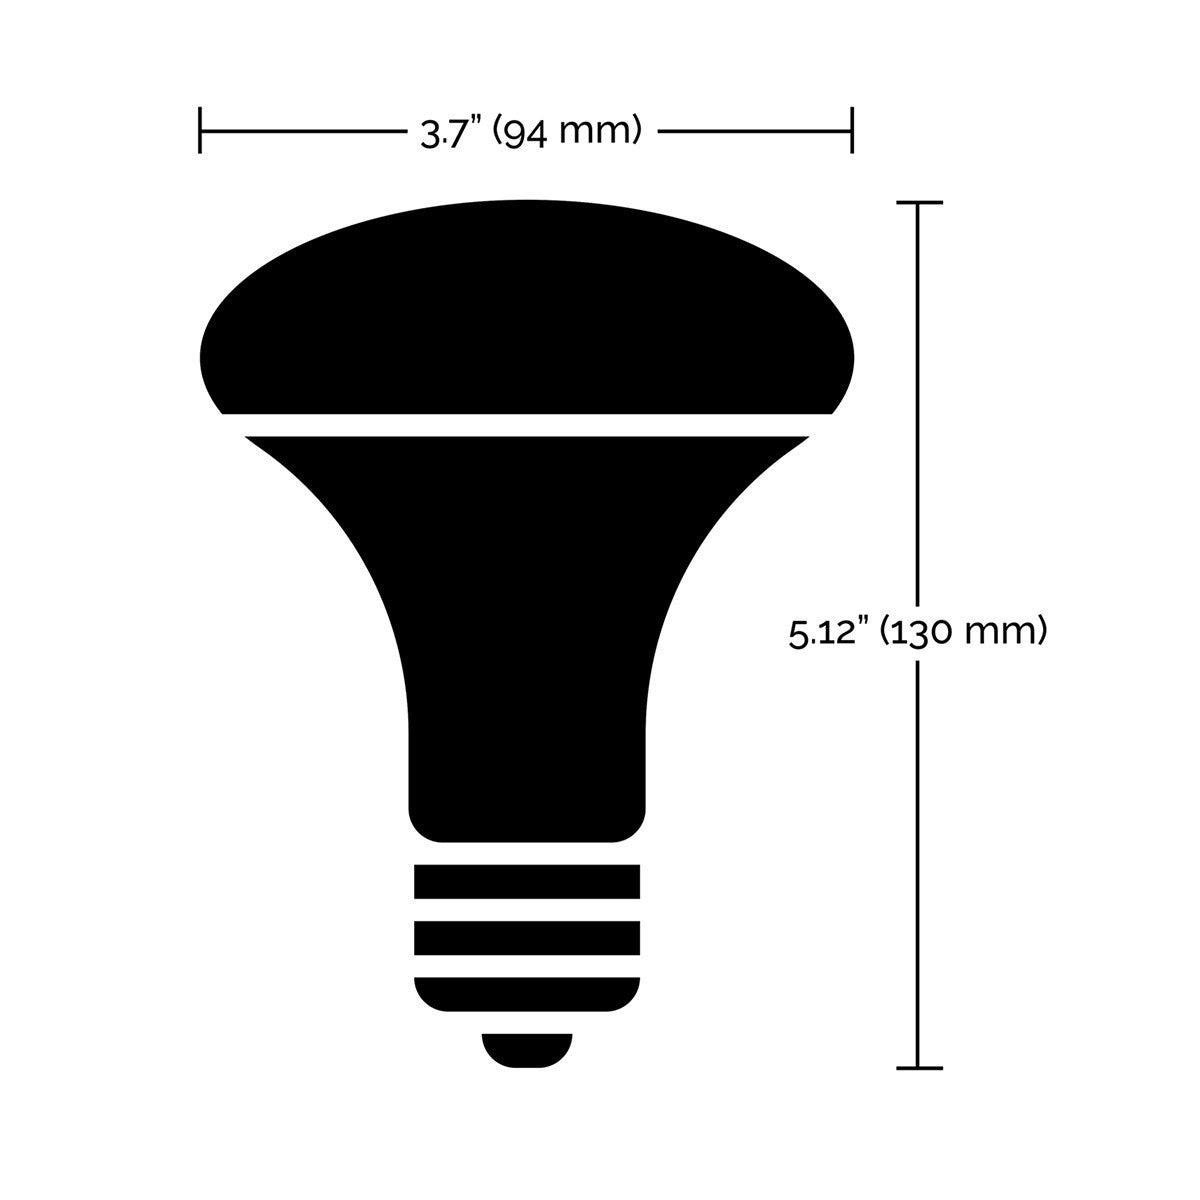 Starfish BR30 Wi-Fi Smart LED Bulb, 9.5 Watts, 760 Lumens, 27K/30K/40K/50K, Tunable White - Bees Lighting